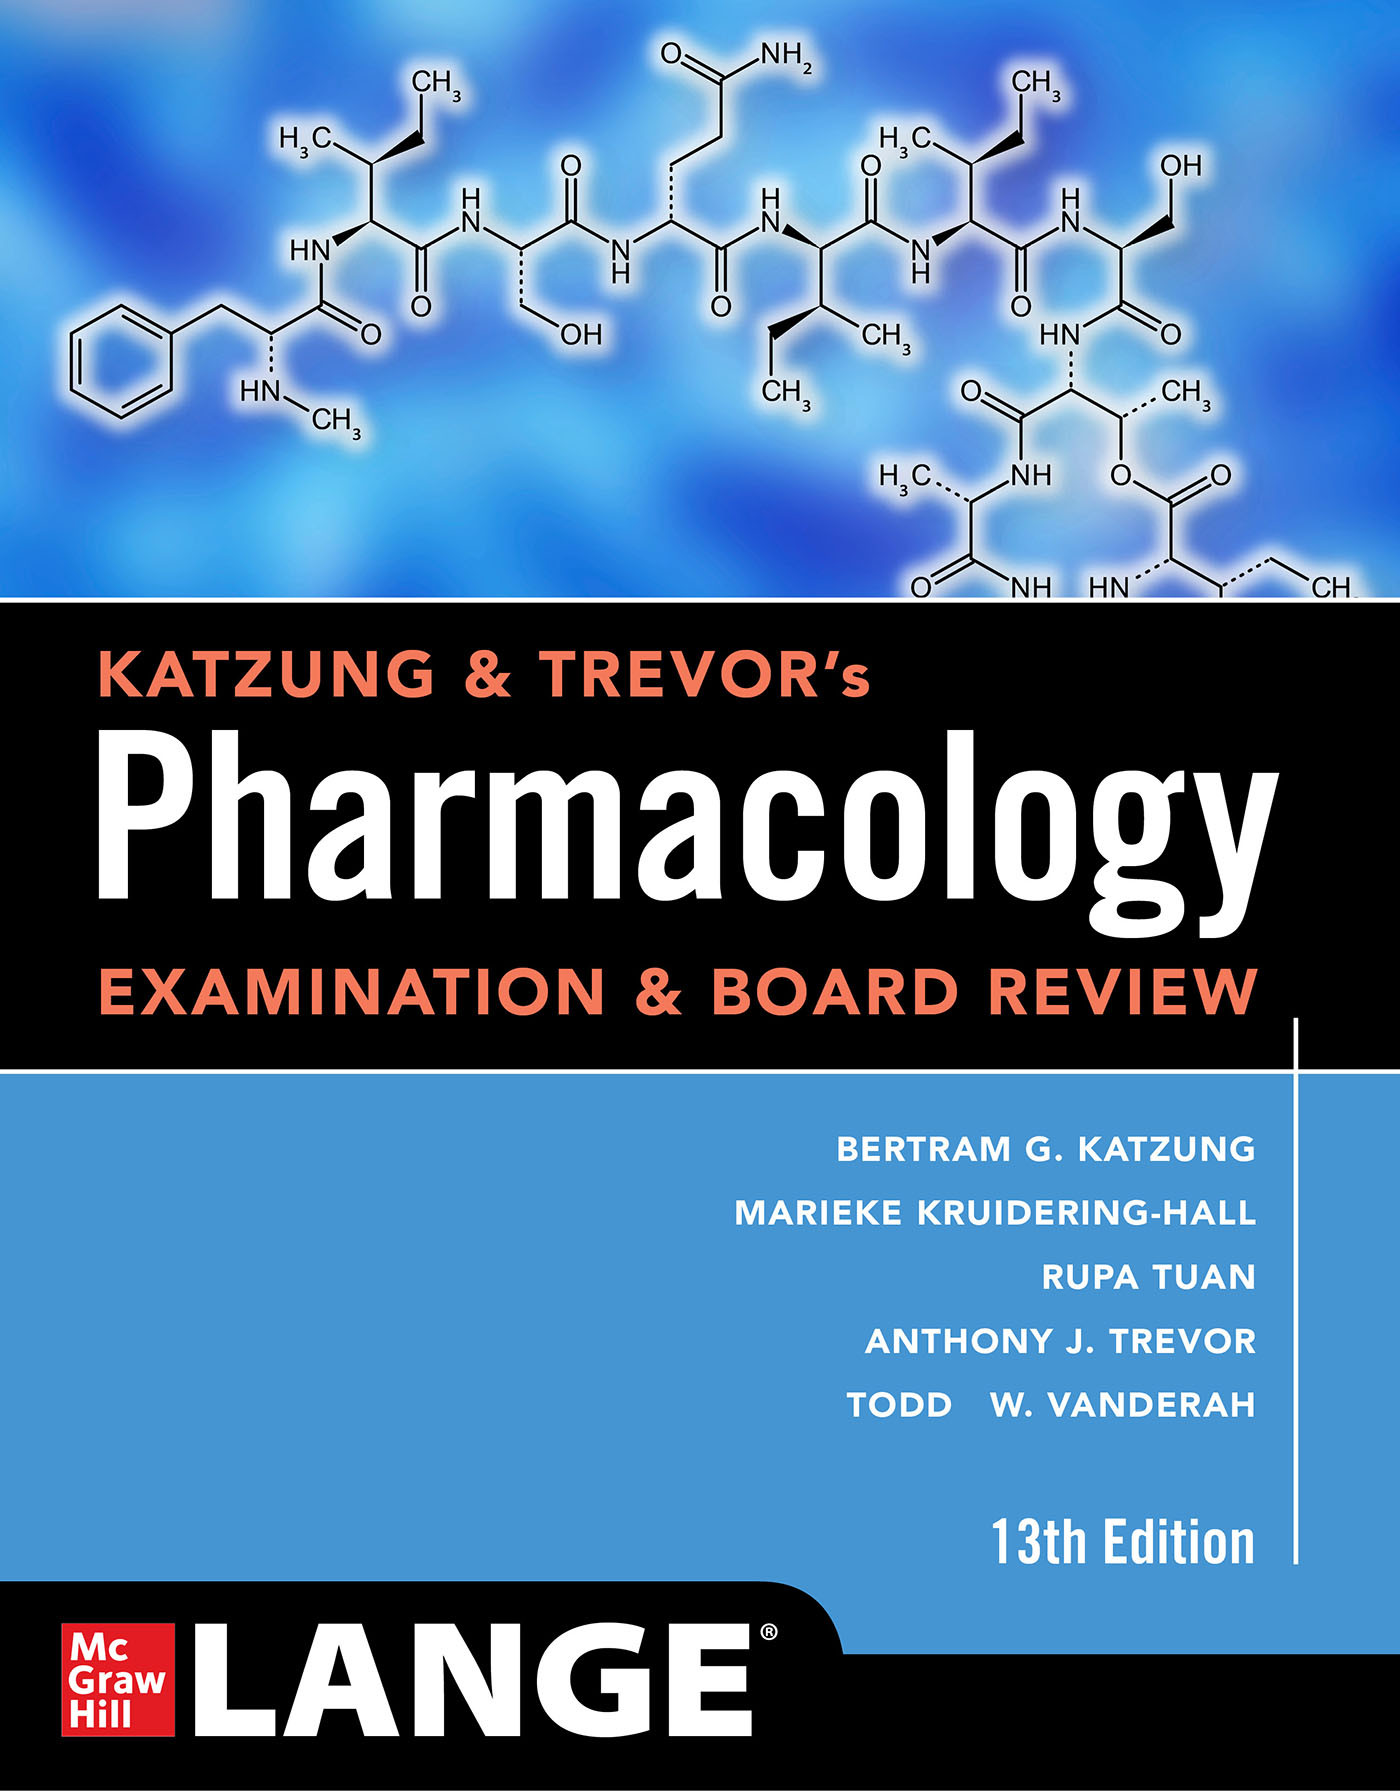 Katzung & Trevor's Pharmacology, 13th ed.- Examination & Board Review